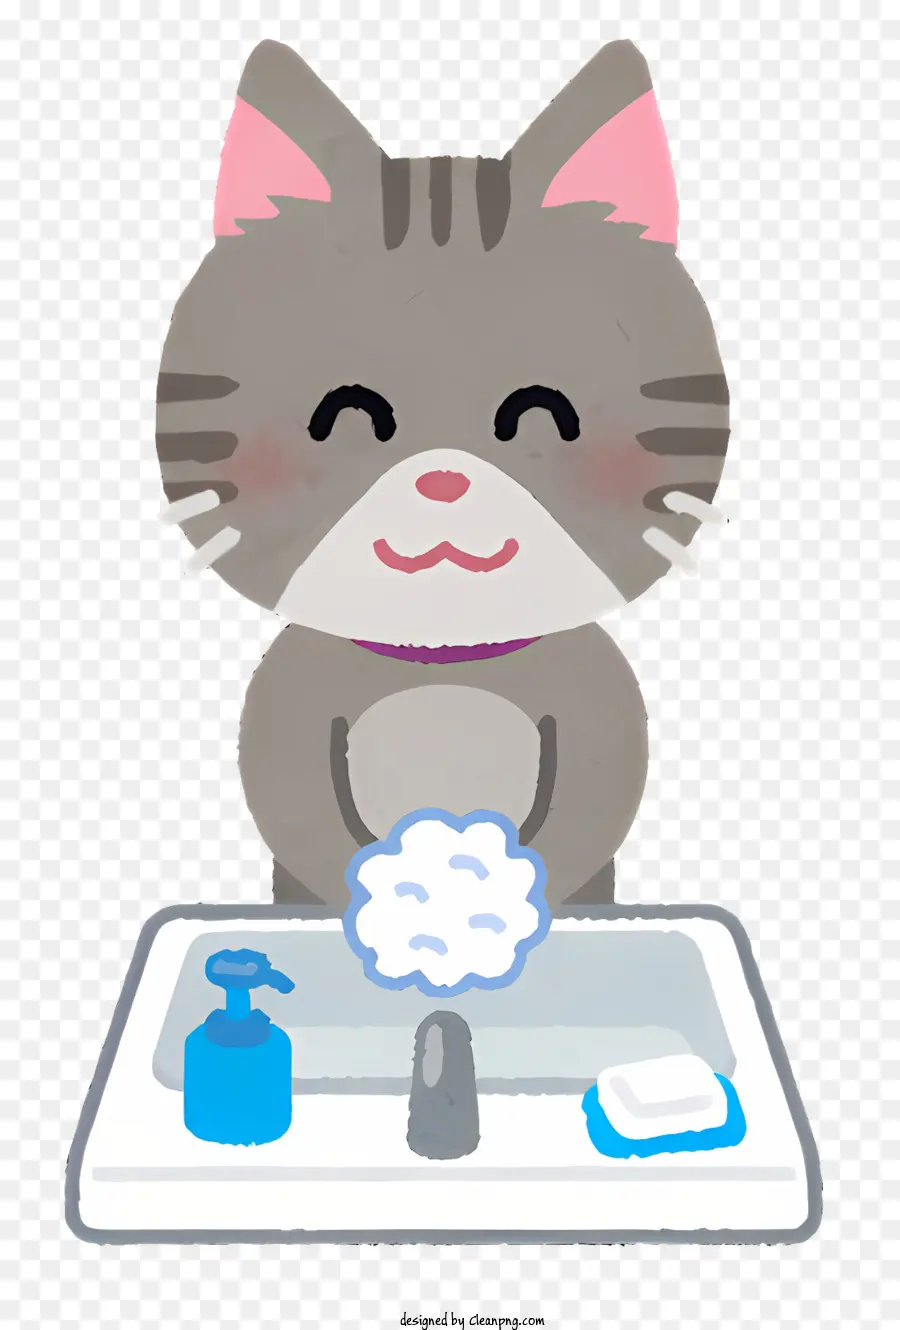 clipart cute gray kitten white fur blue eyes toothbrush